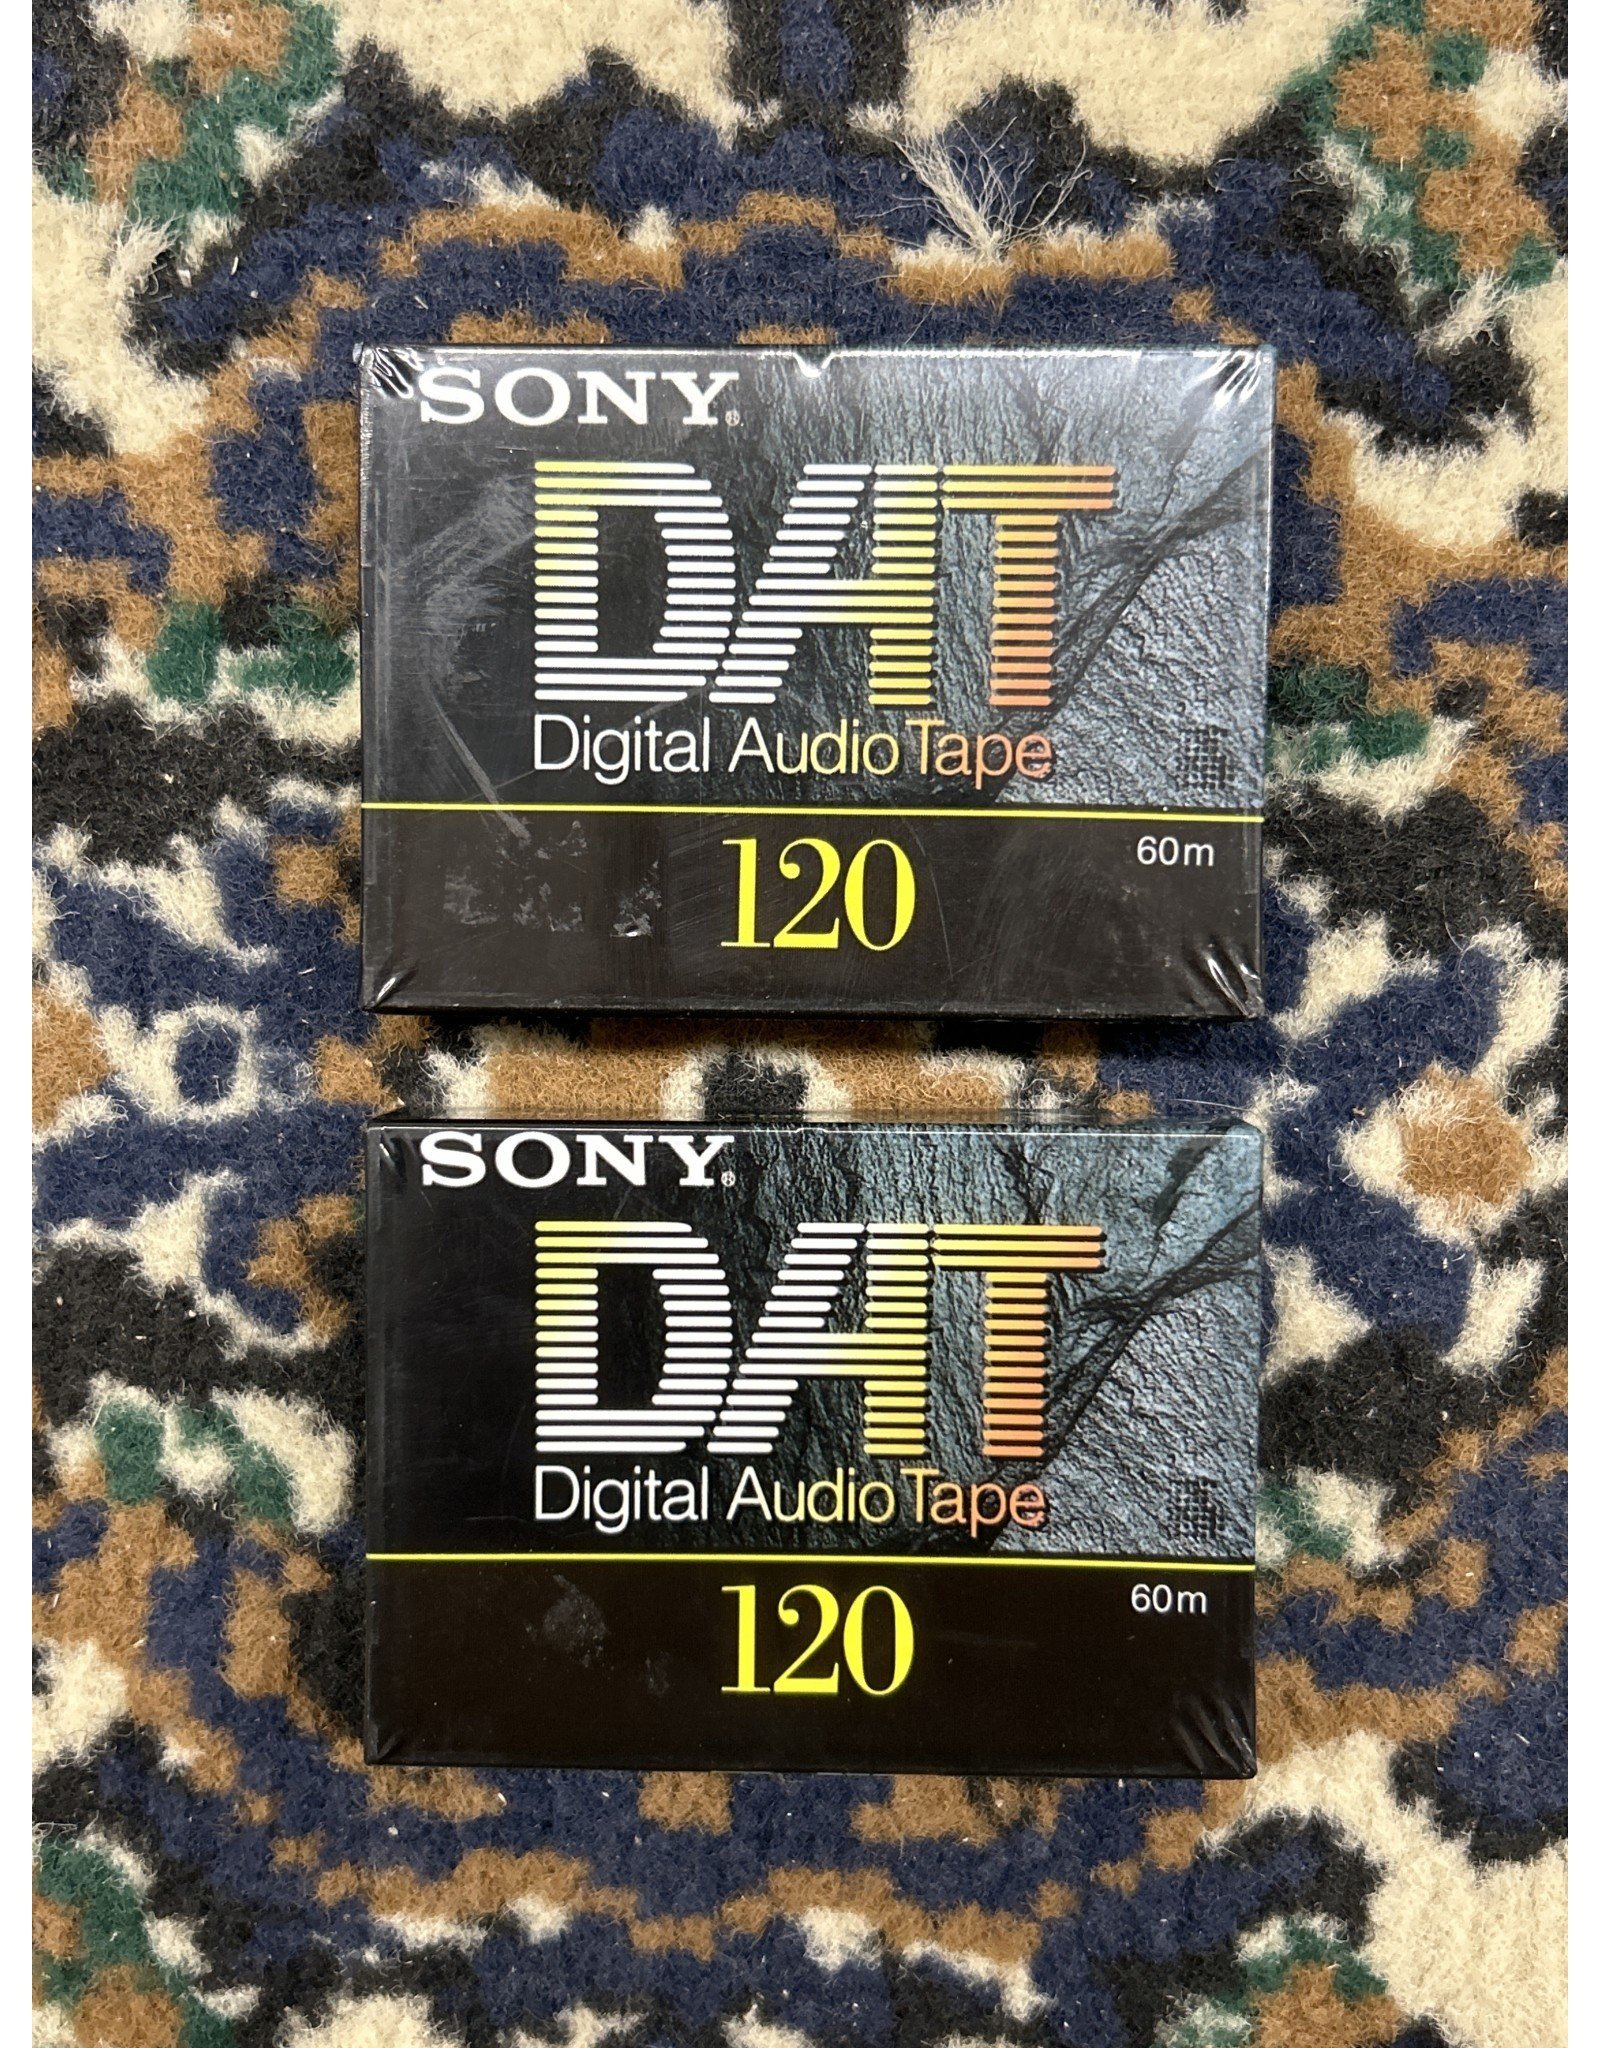 Sony DT-120RA 60m Digital Audio Tapes